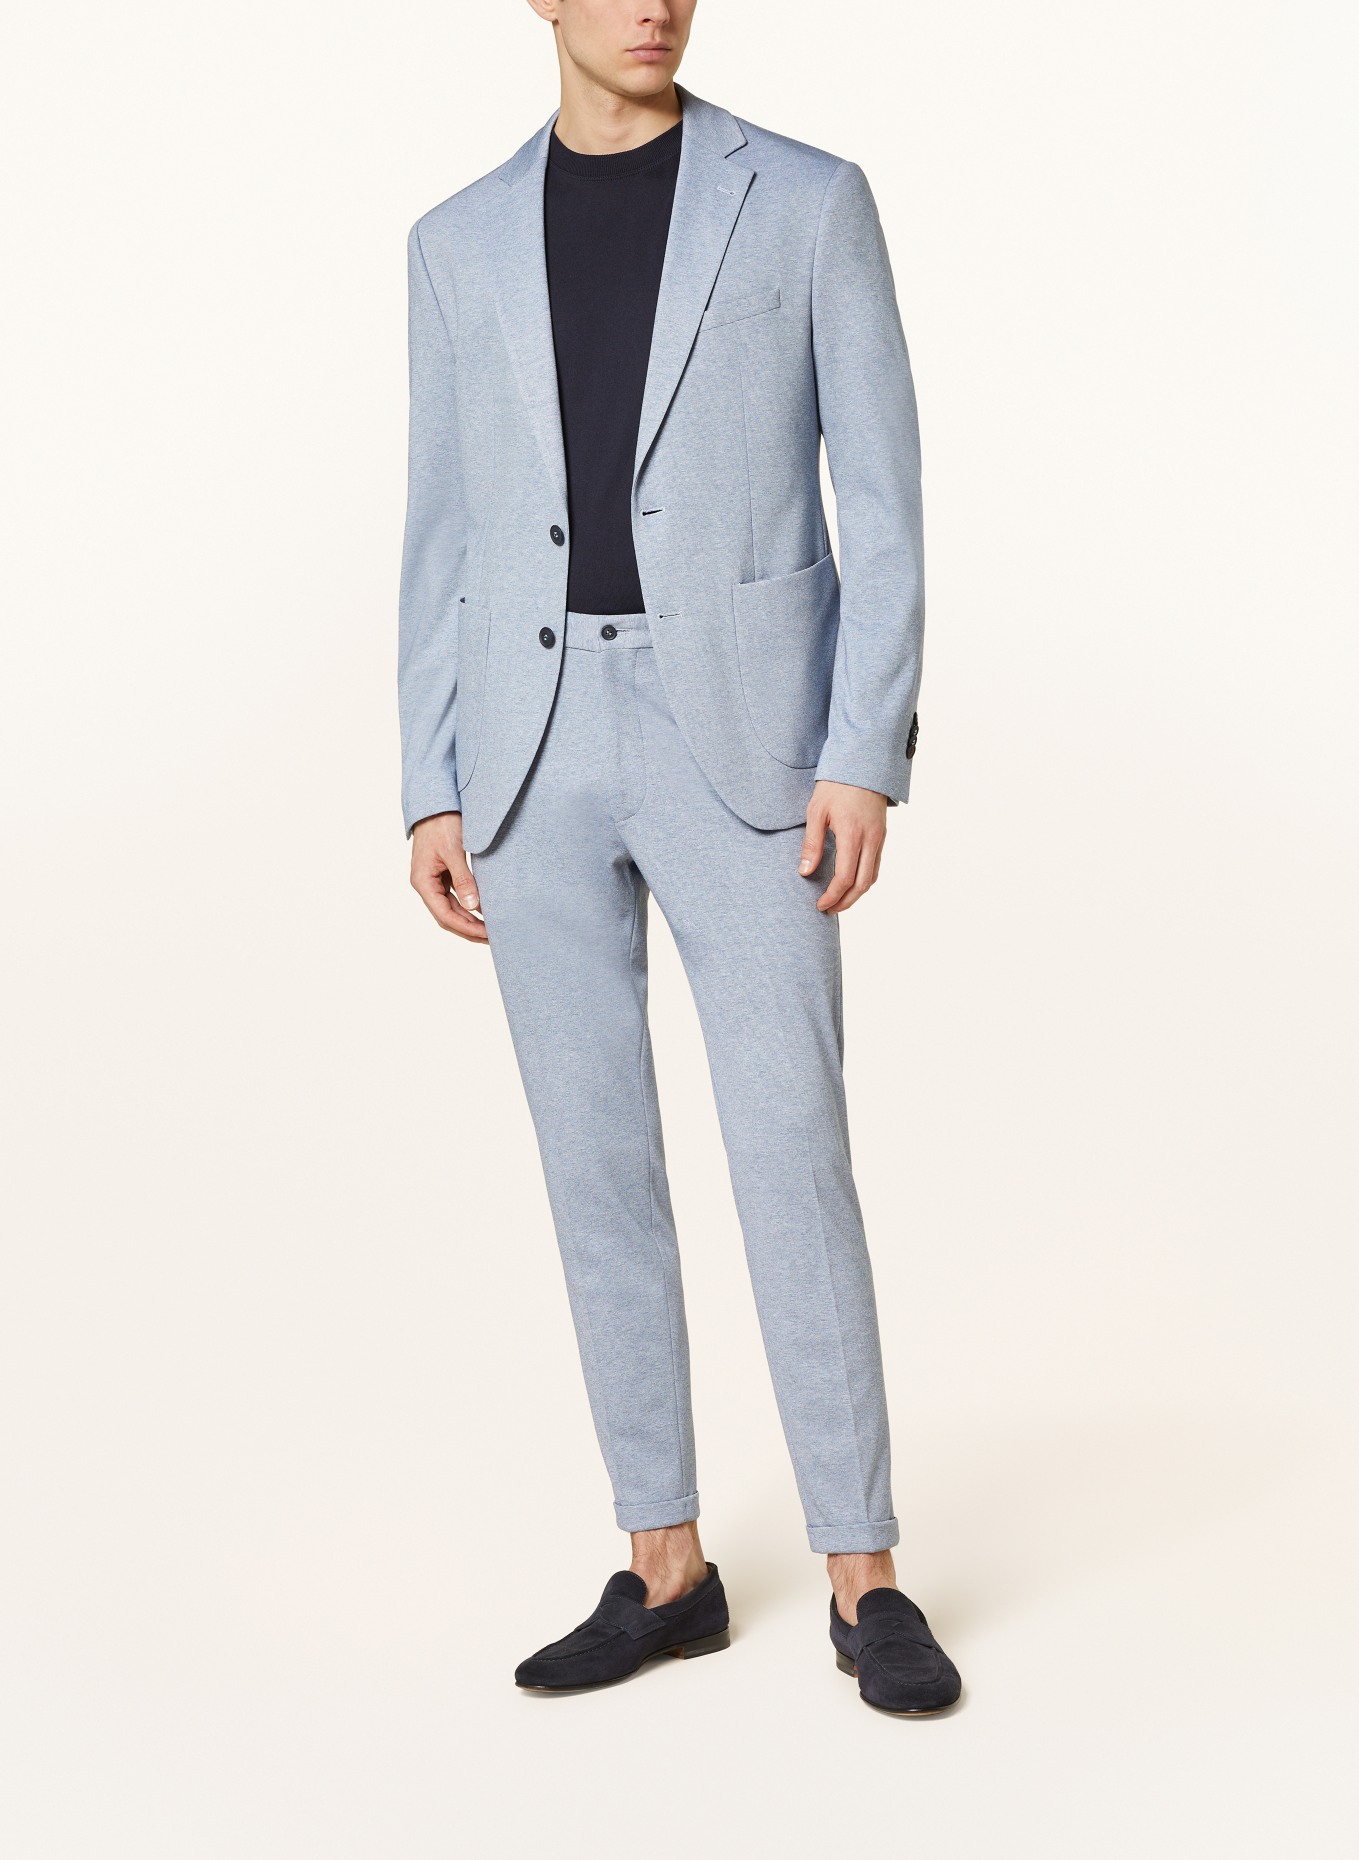 CINQUE Suit jacket CIDATI extra slim fit in jersey, Color: 68 dunkelblau (Image 2)